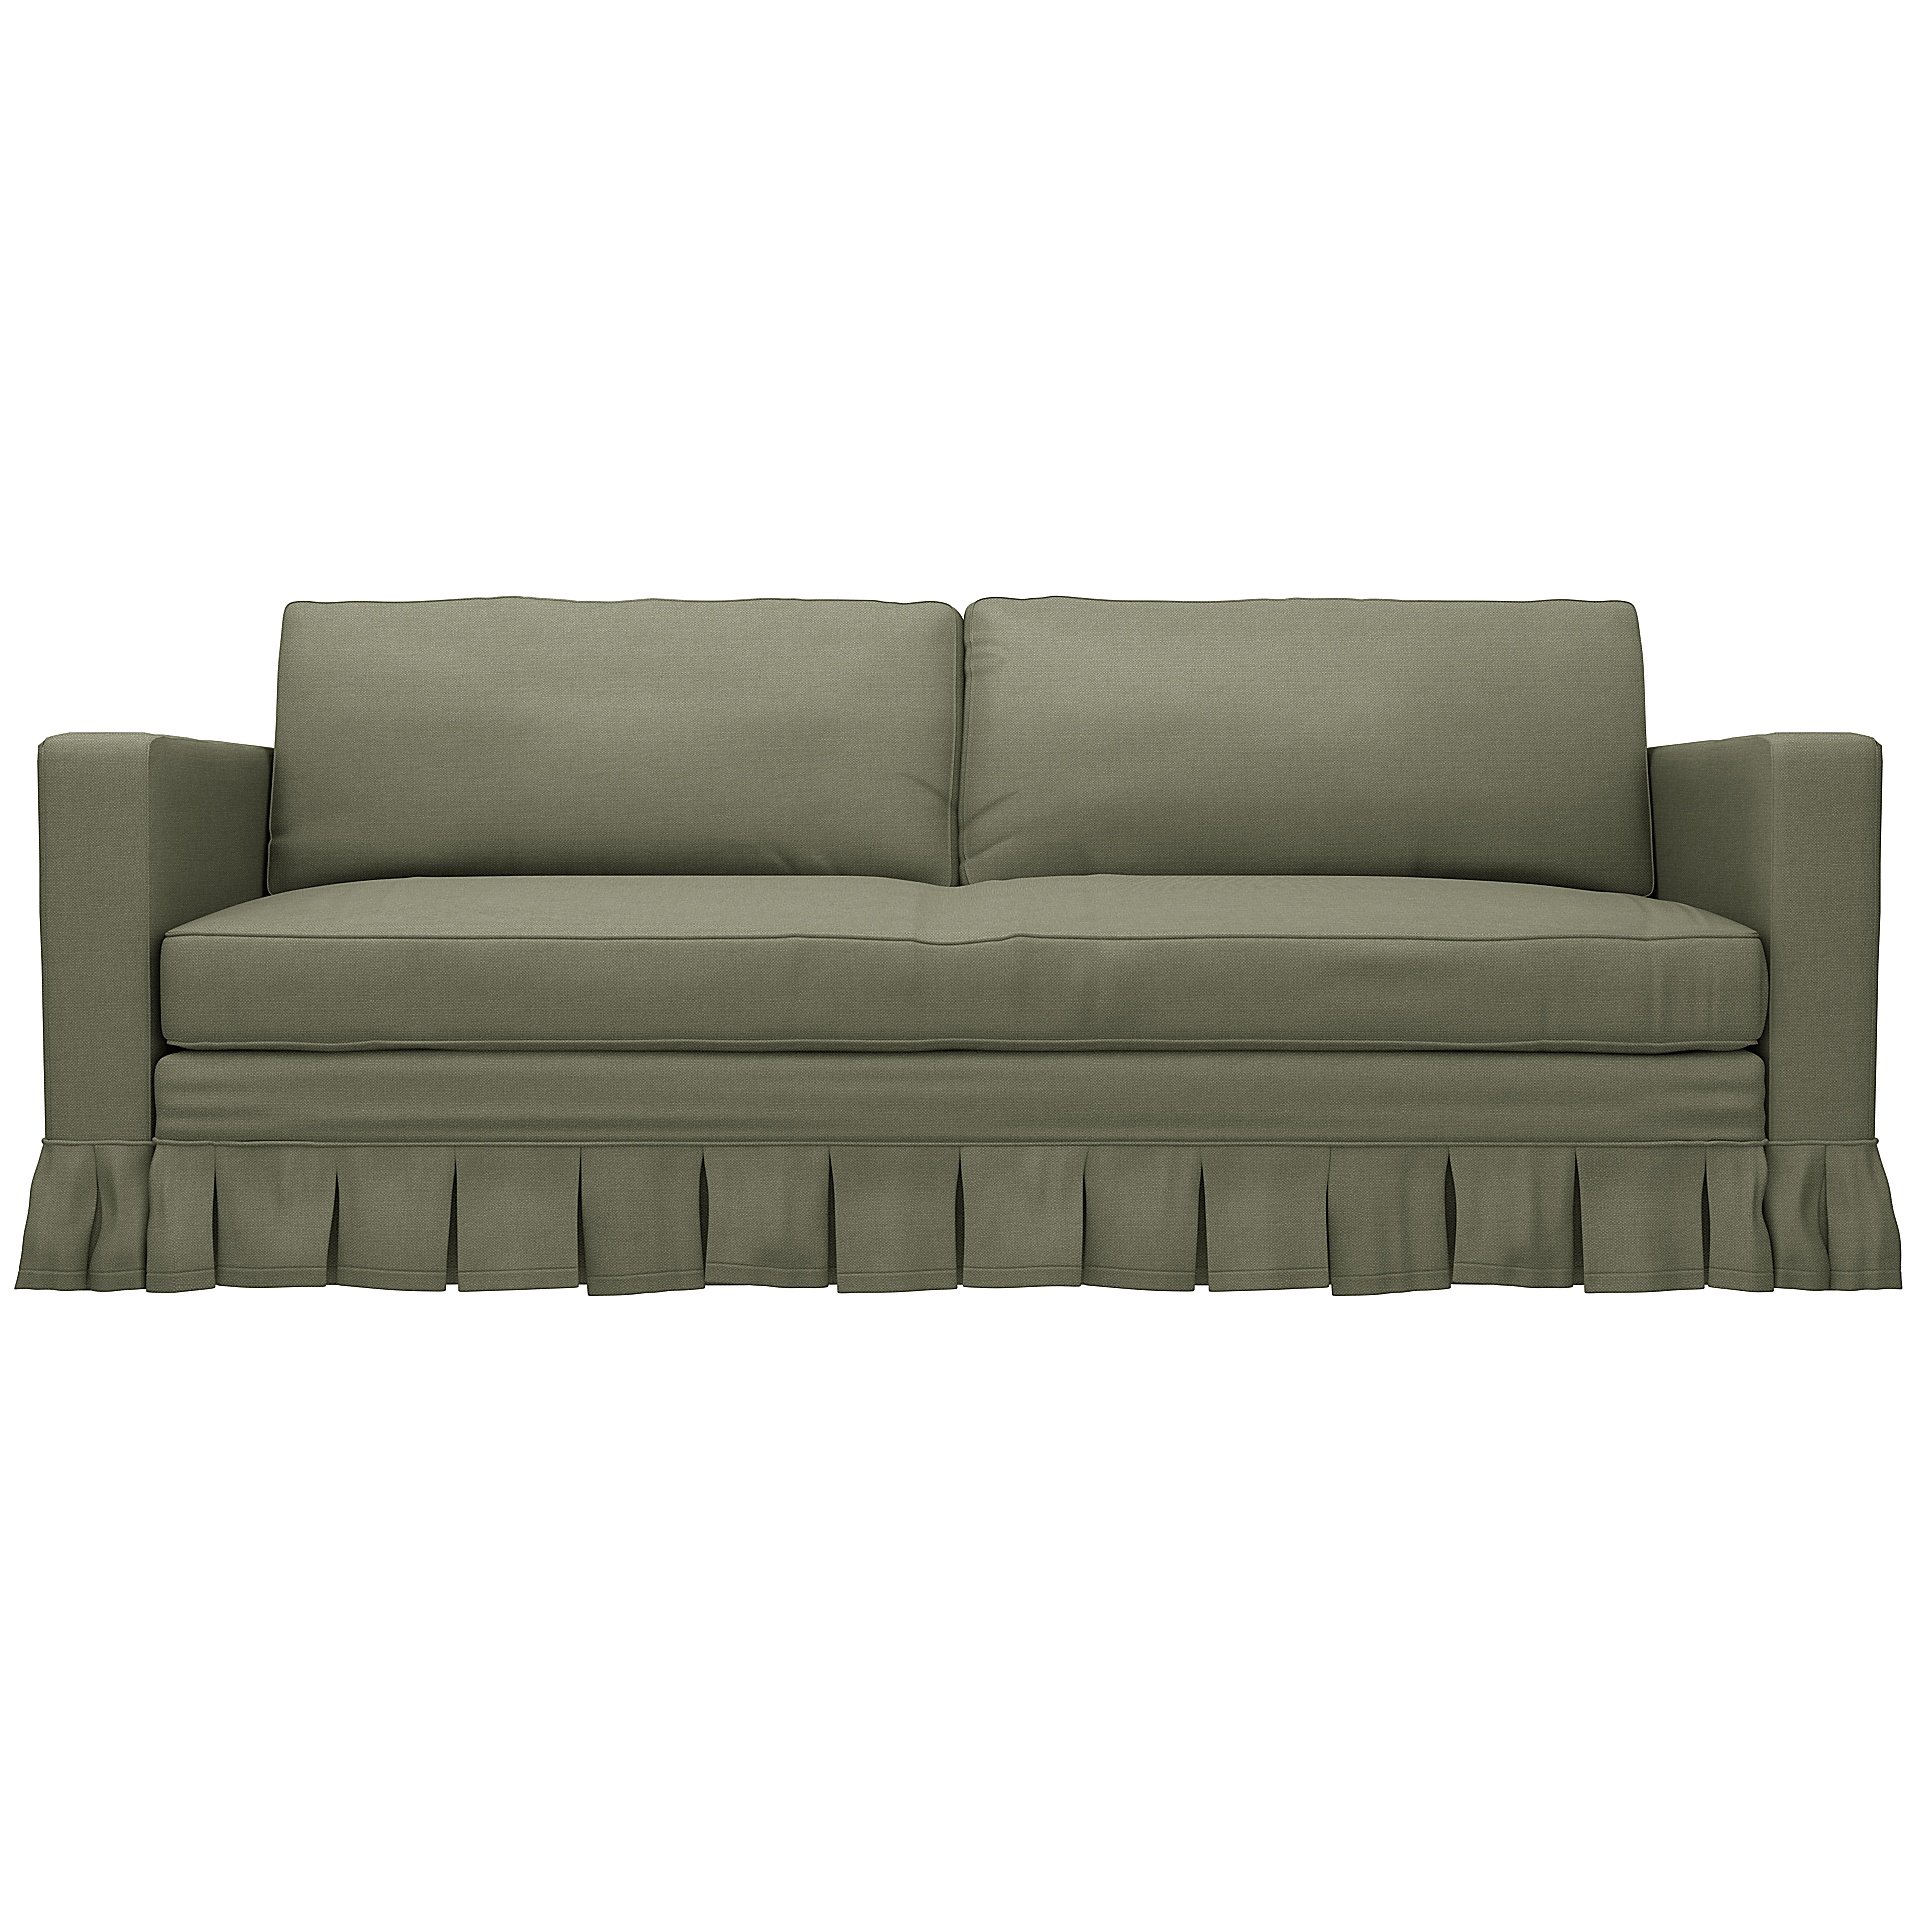 IKEA - Karlstad 3 Seater Sofa Cover, Sage, Linen - Bemz